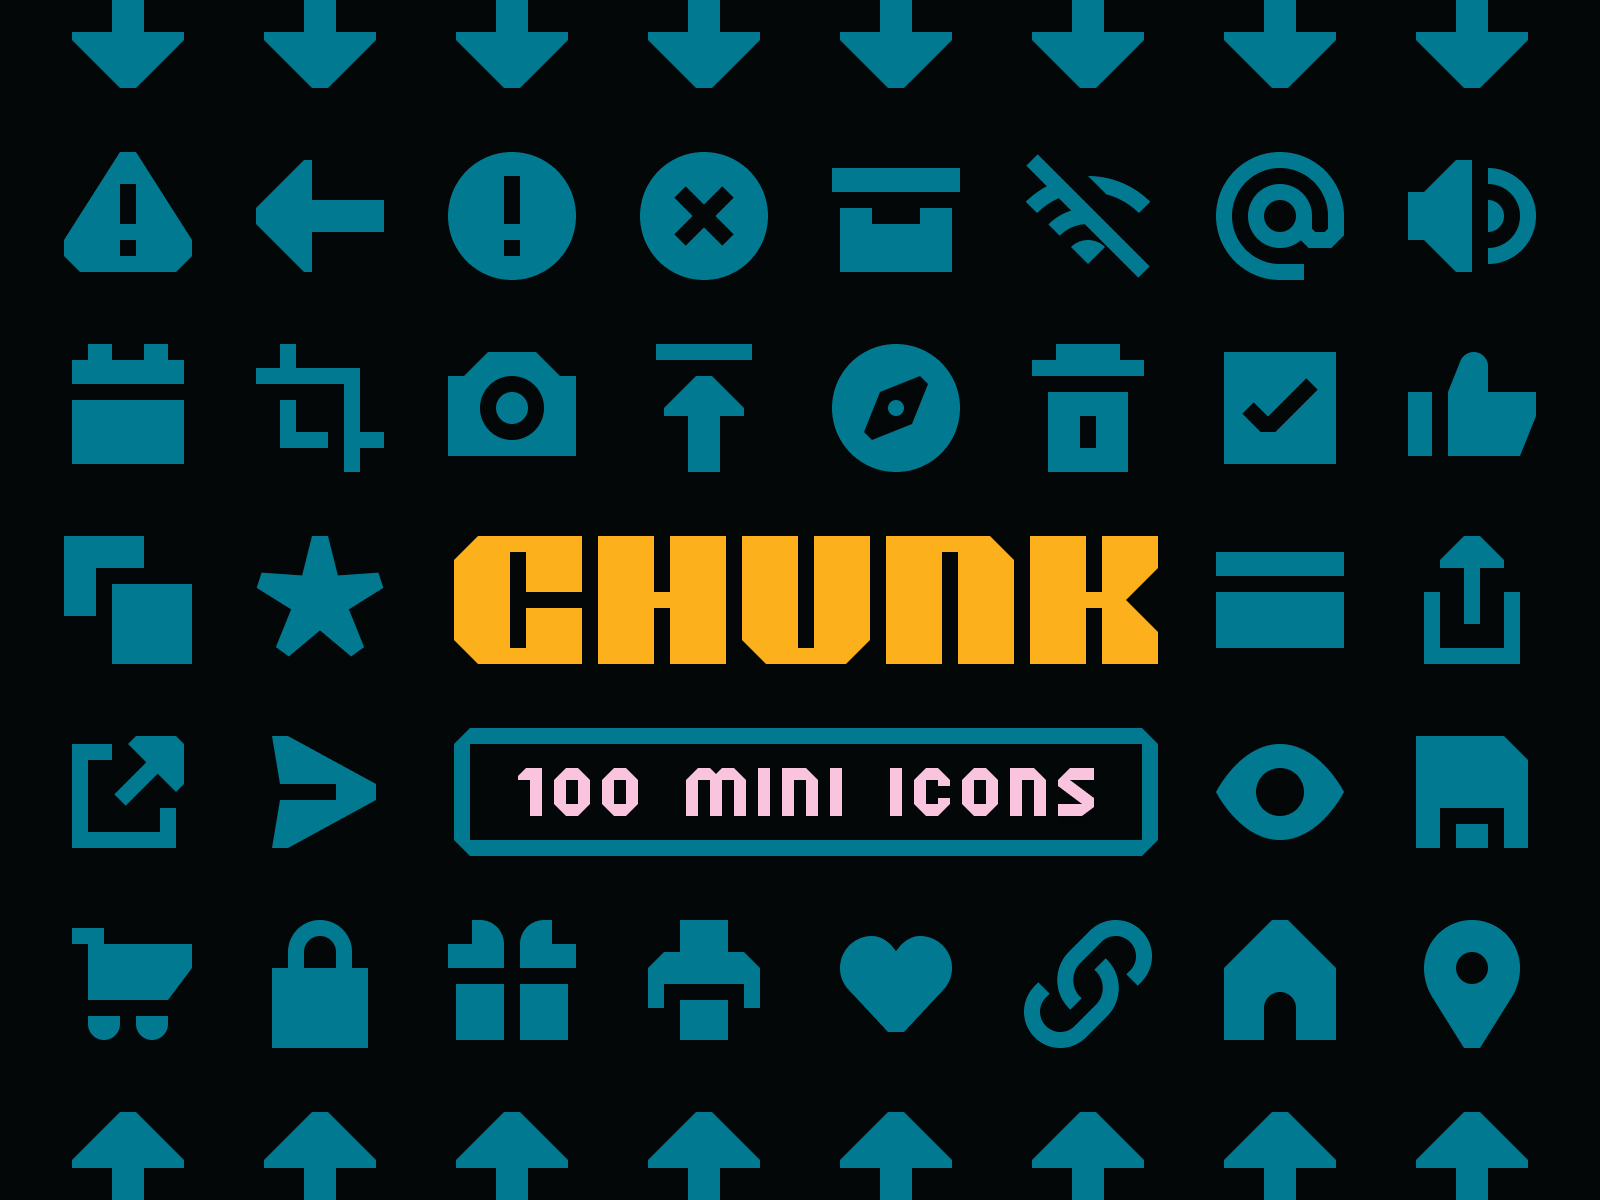 A free chunk icons